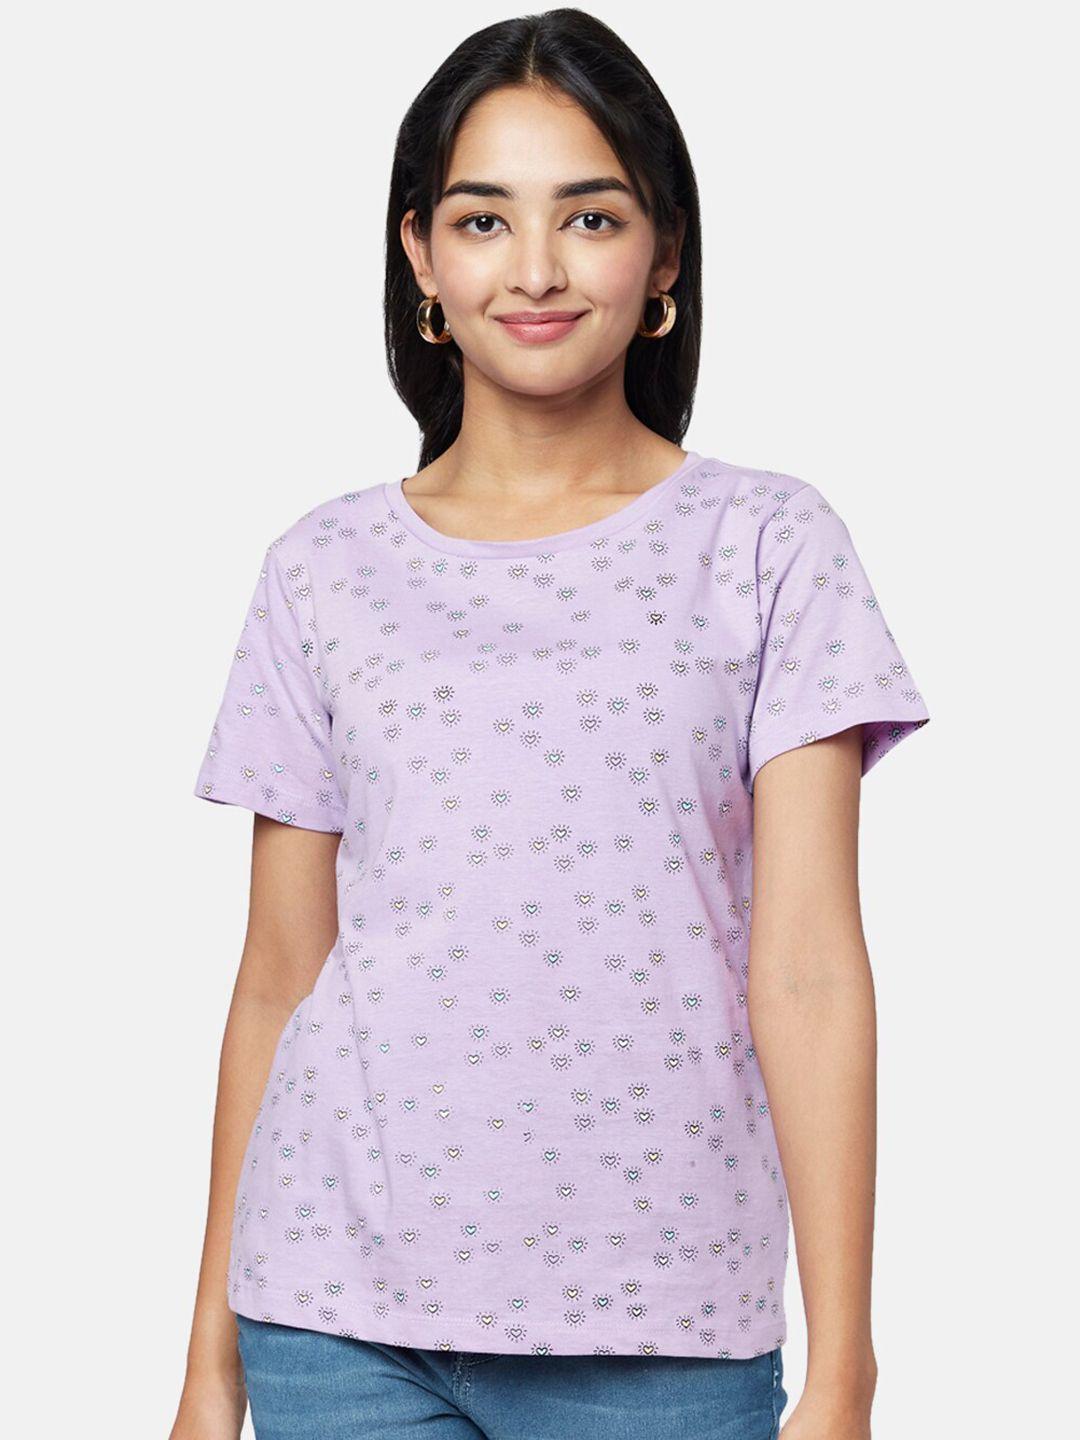 yu by pantaloons women purple cotton t-shirt